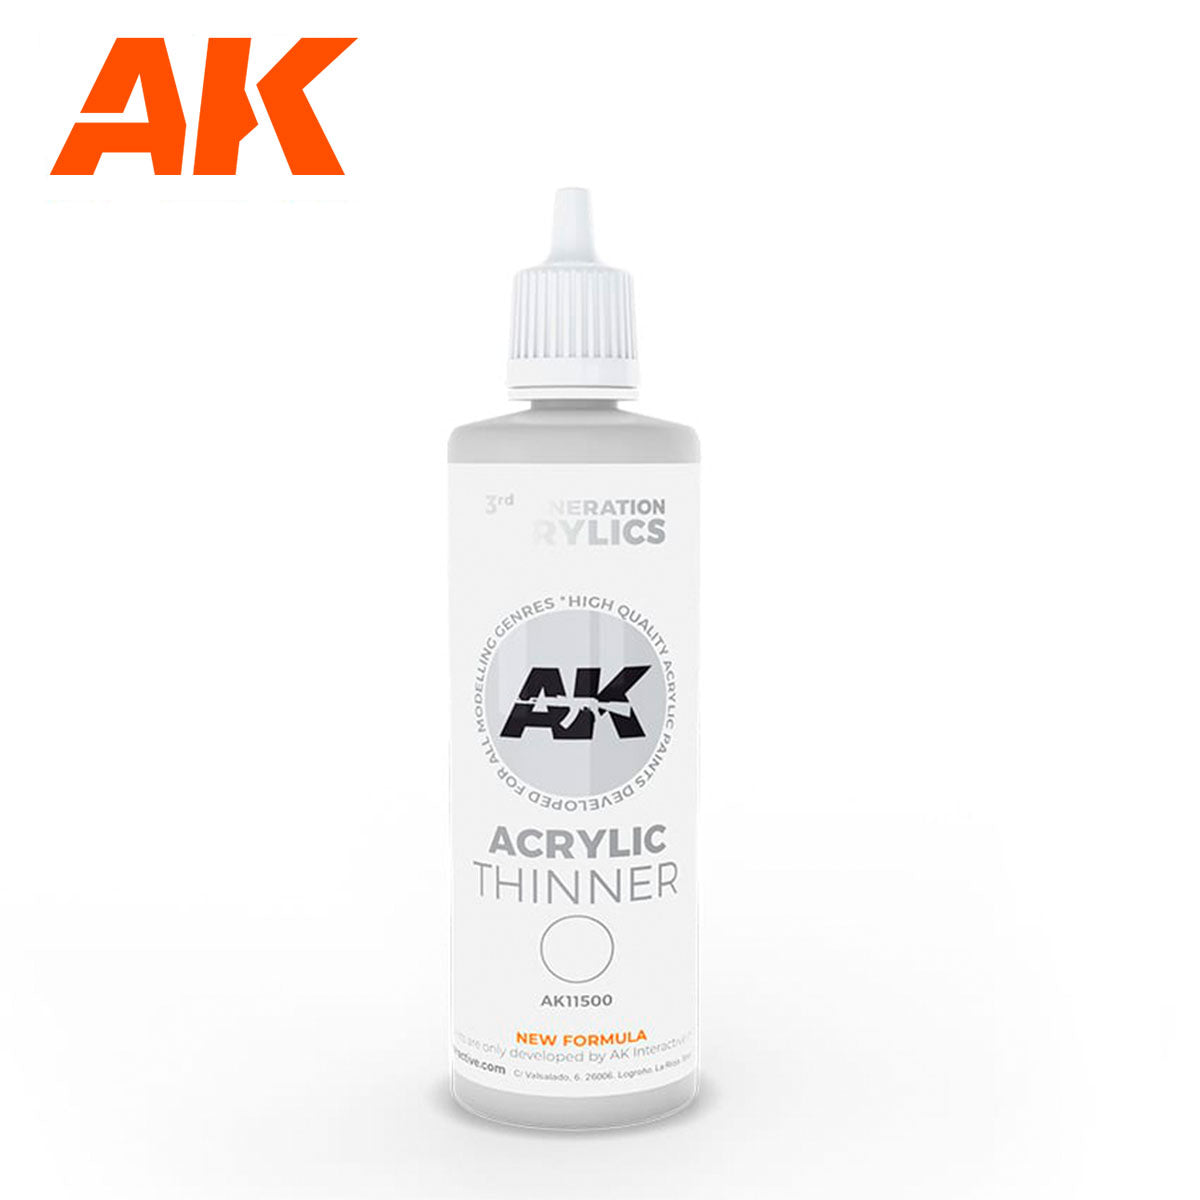 AK Interactive 3rd Generation Acrylic Thinner 100ml Bottle